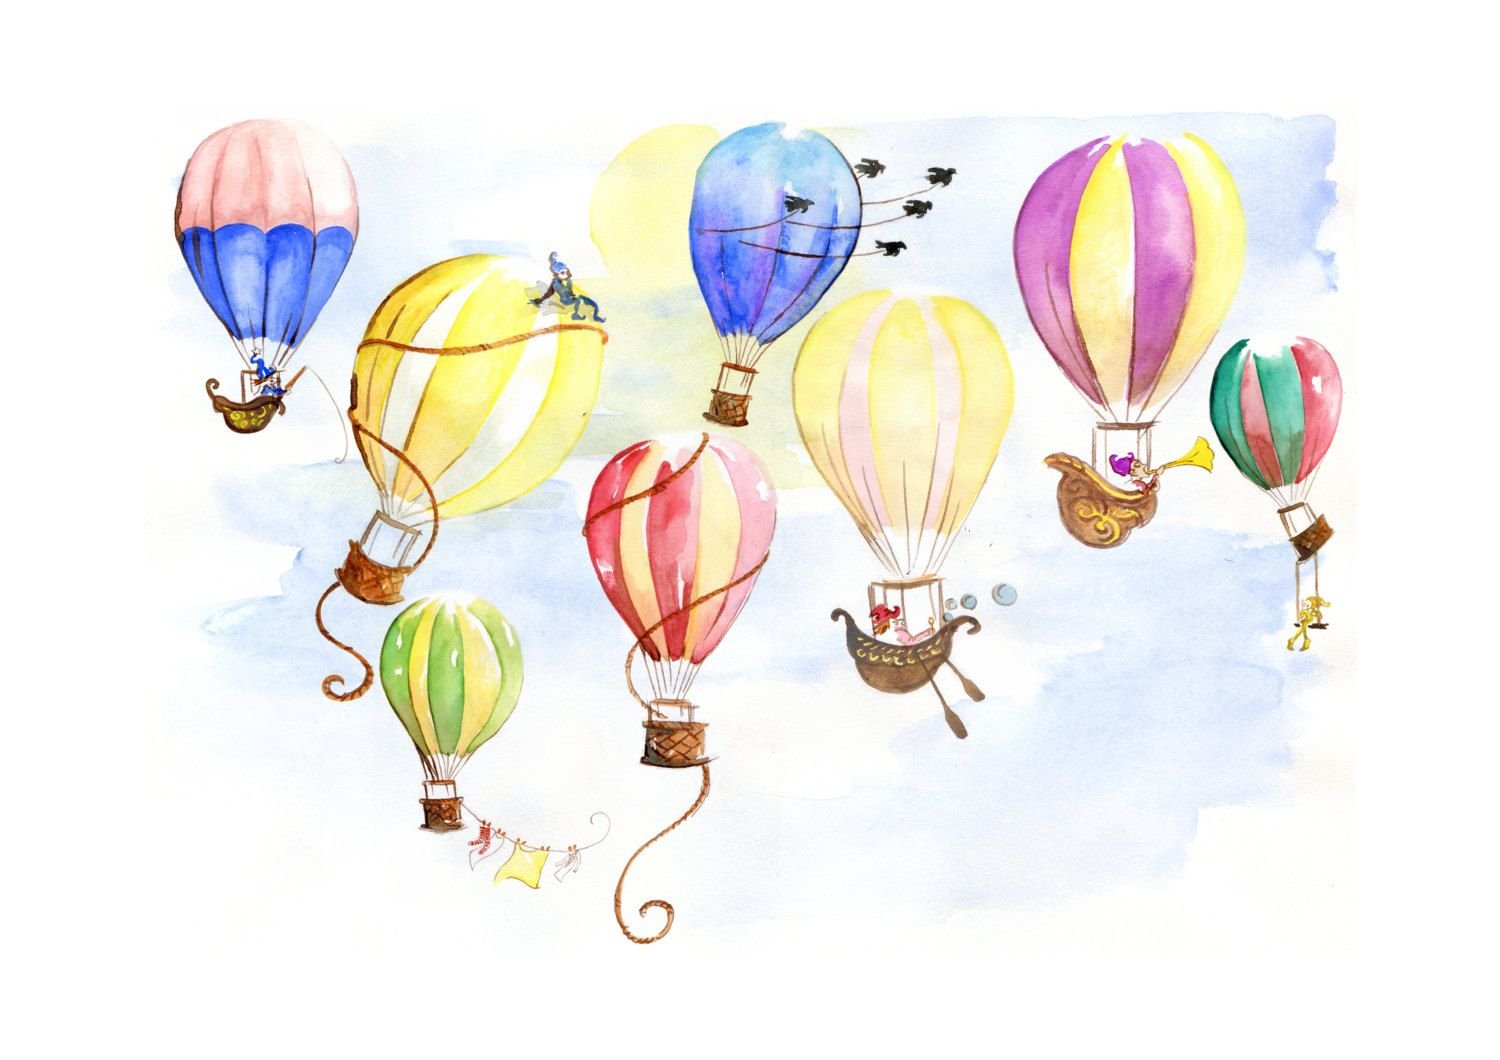 Коротышки воздушный шар. Акварельный воздушный шар. Воздушные шары акварель. Воздушный шар иллюстрация. Рисование акварелью воздушные шары)..